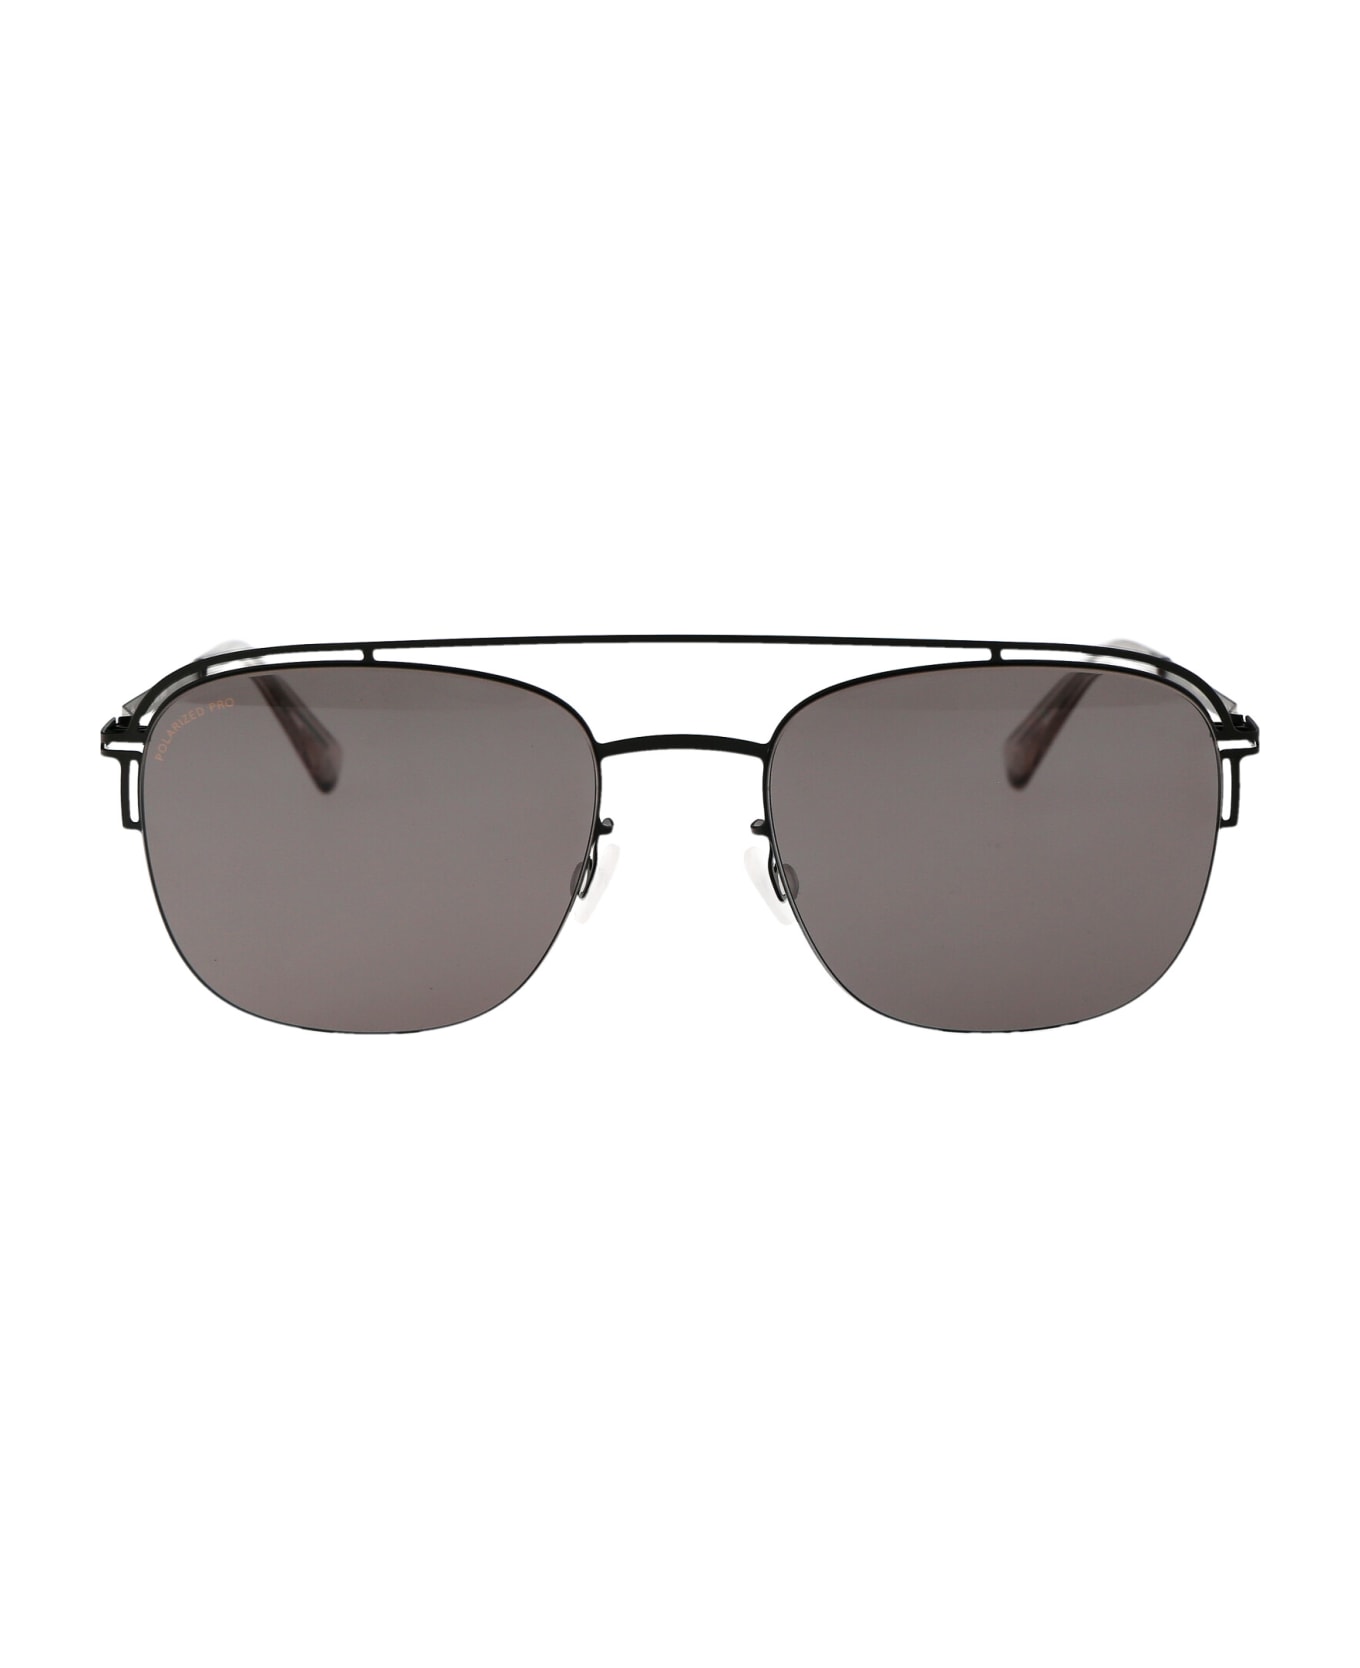 Mykita Nor Sunglasses - 002 Black Polarized Pro Hi-Con サングラス